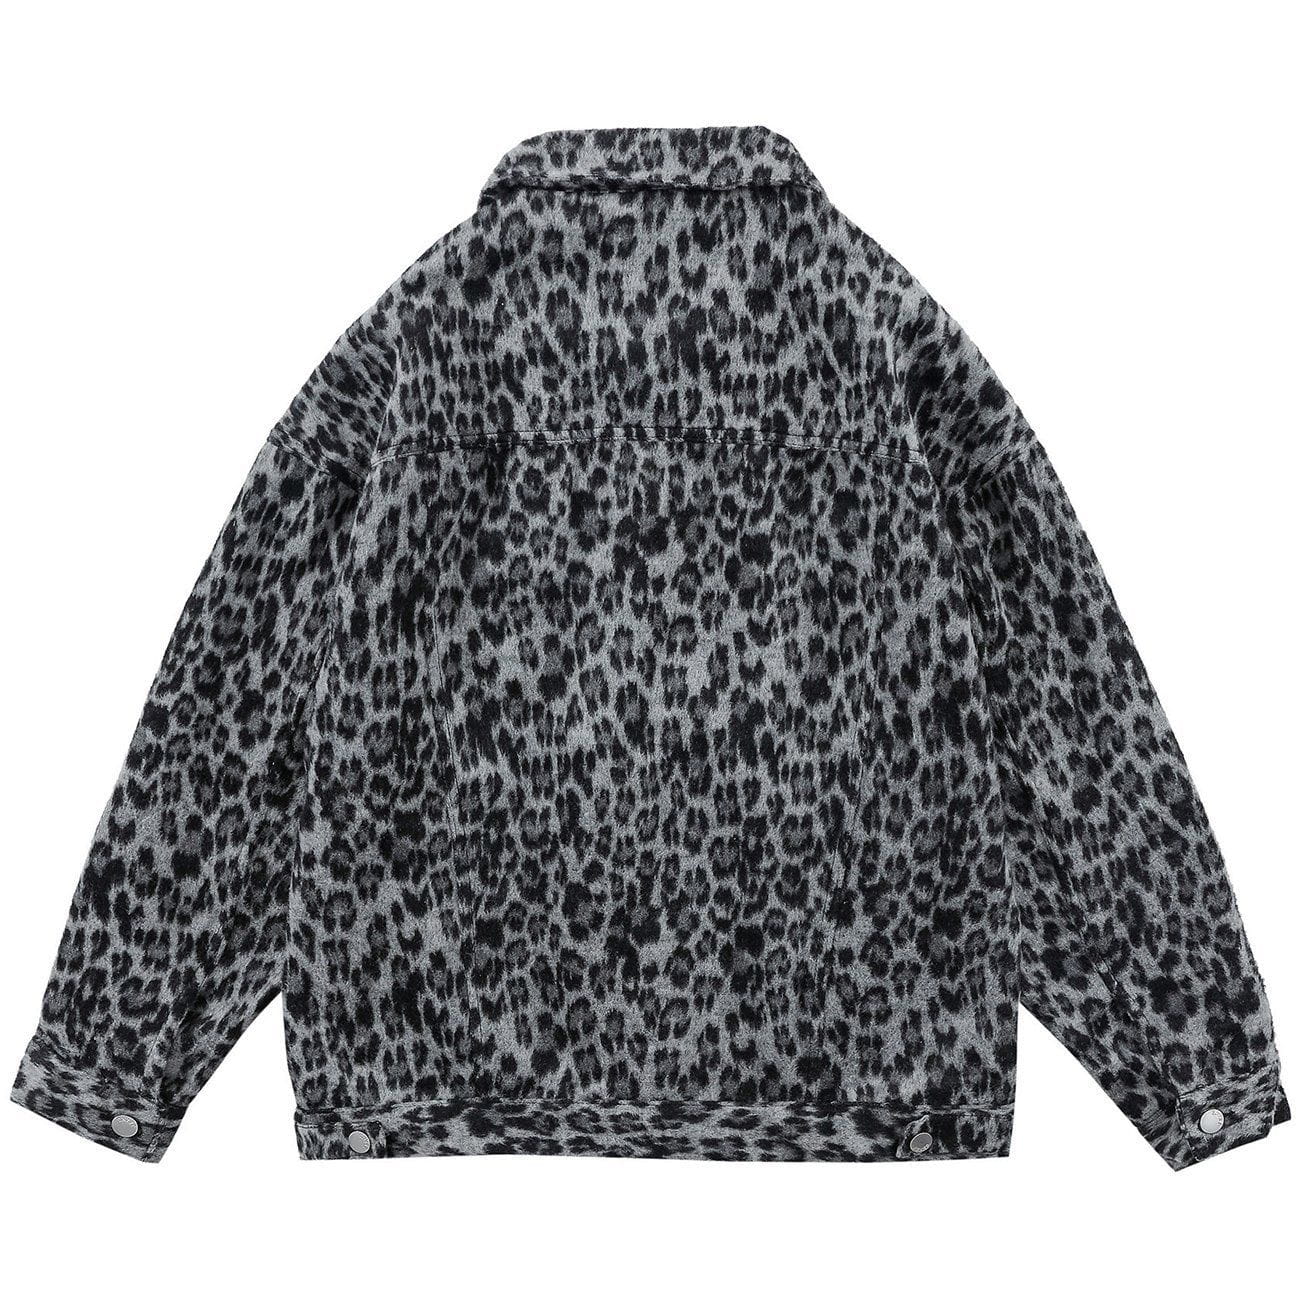 Majesda® - Vintage Leopard Print Jacket outfit ideas streetwear fashion